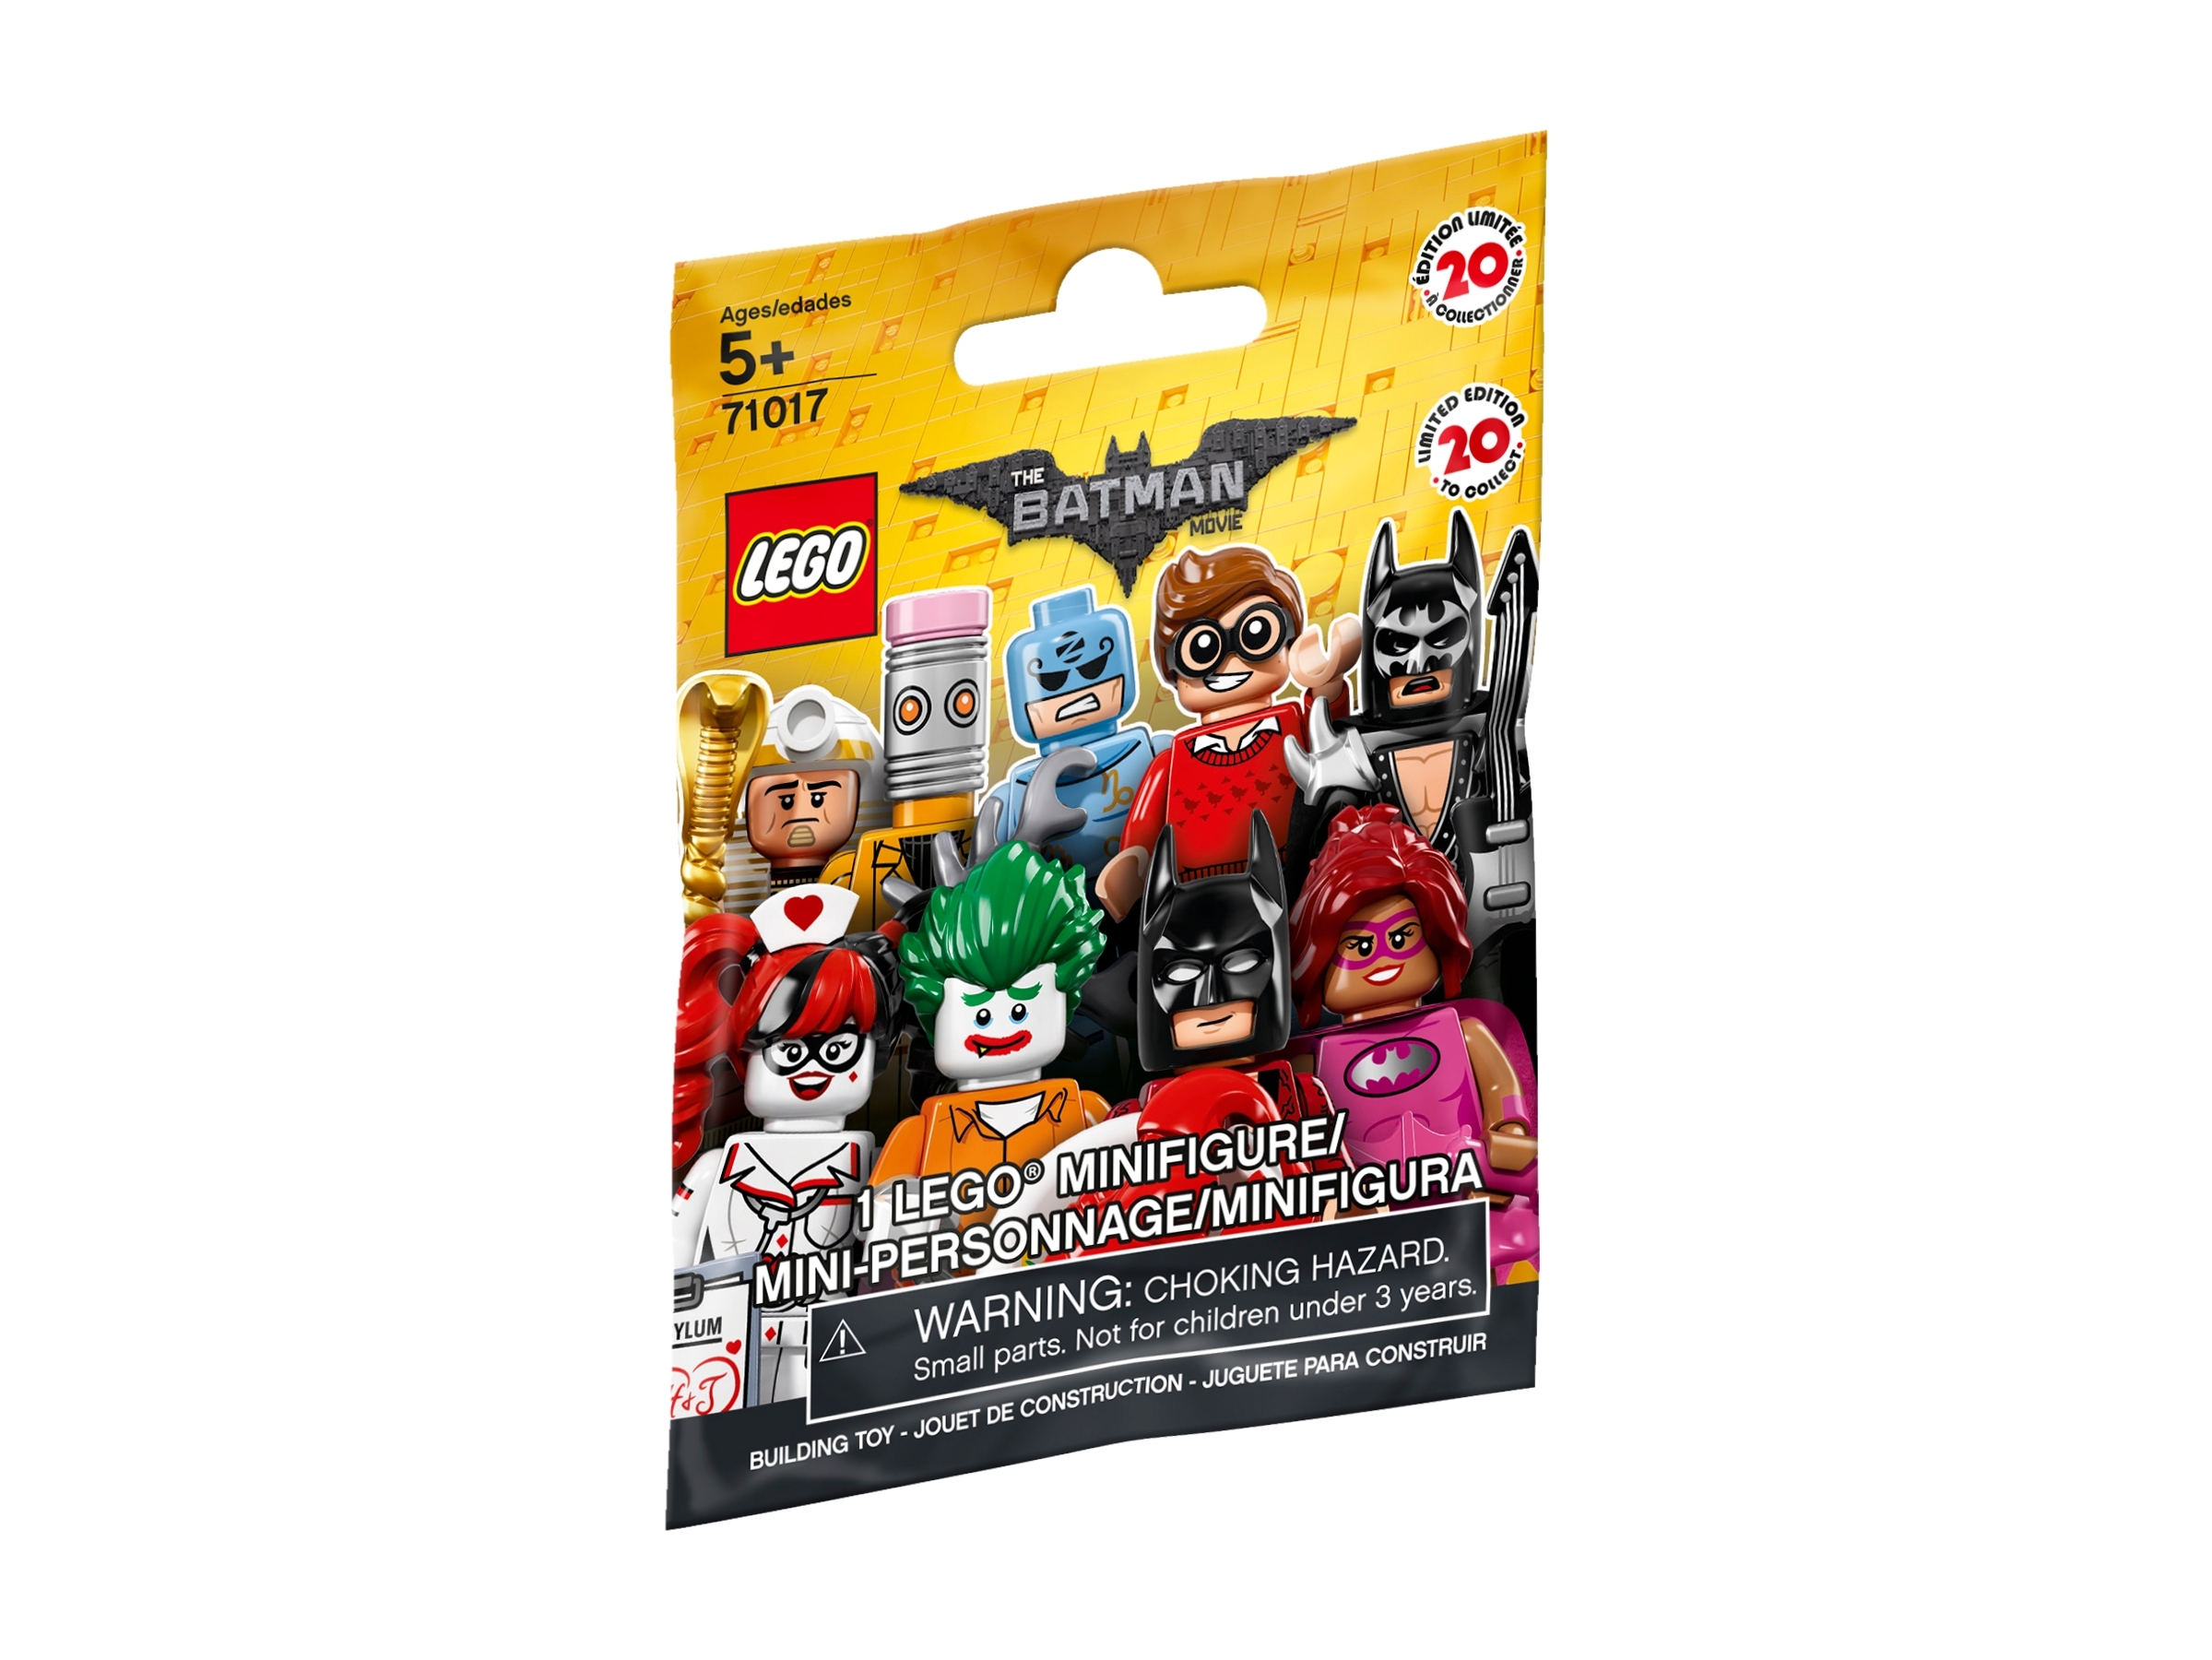 LEGO Minifigures The Lego Batman Movie Series 1 71017 New In Bag 